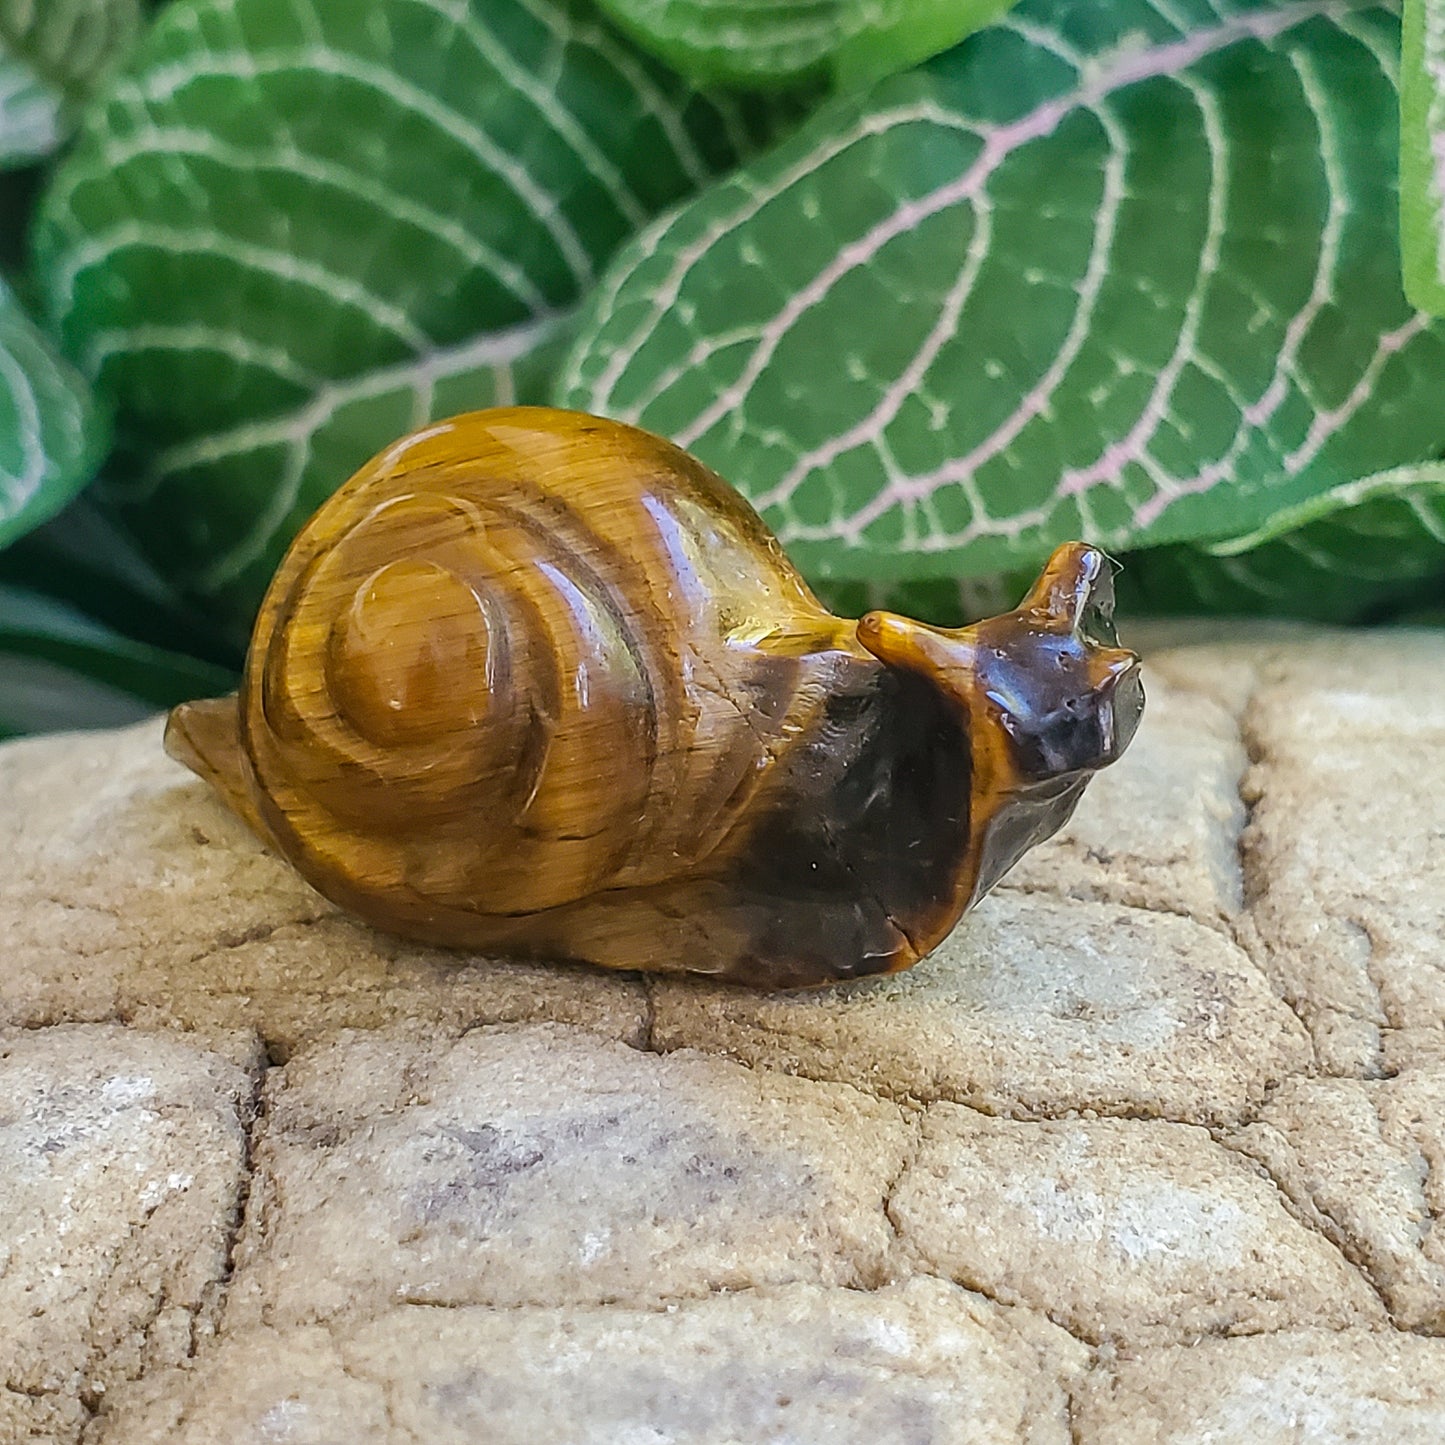 Snails - Rose Quartz, Quartz, & Tiger Eye - Small